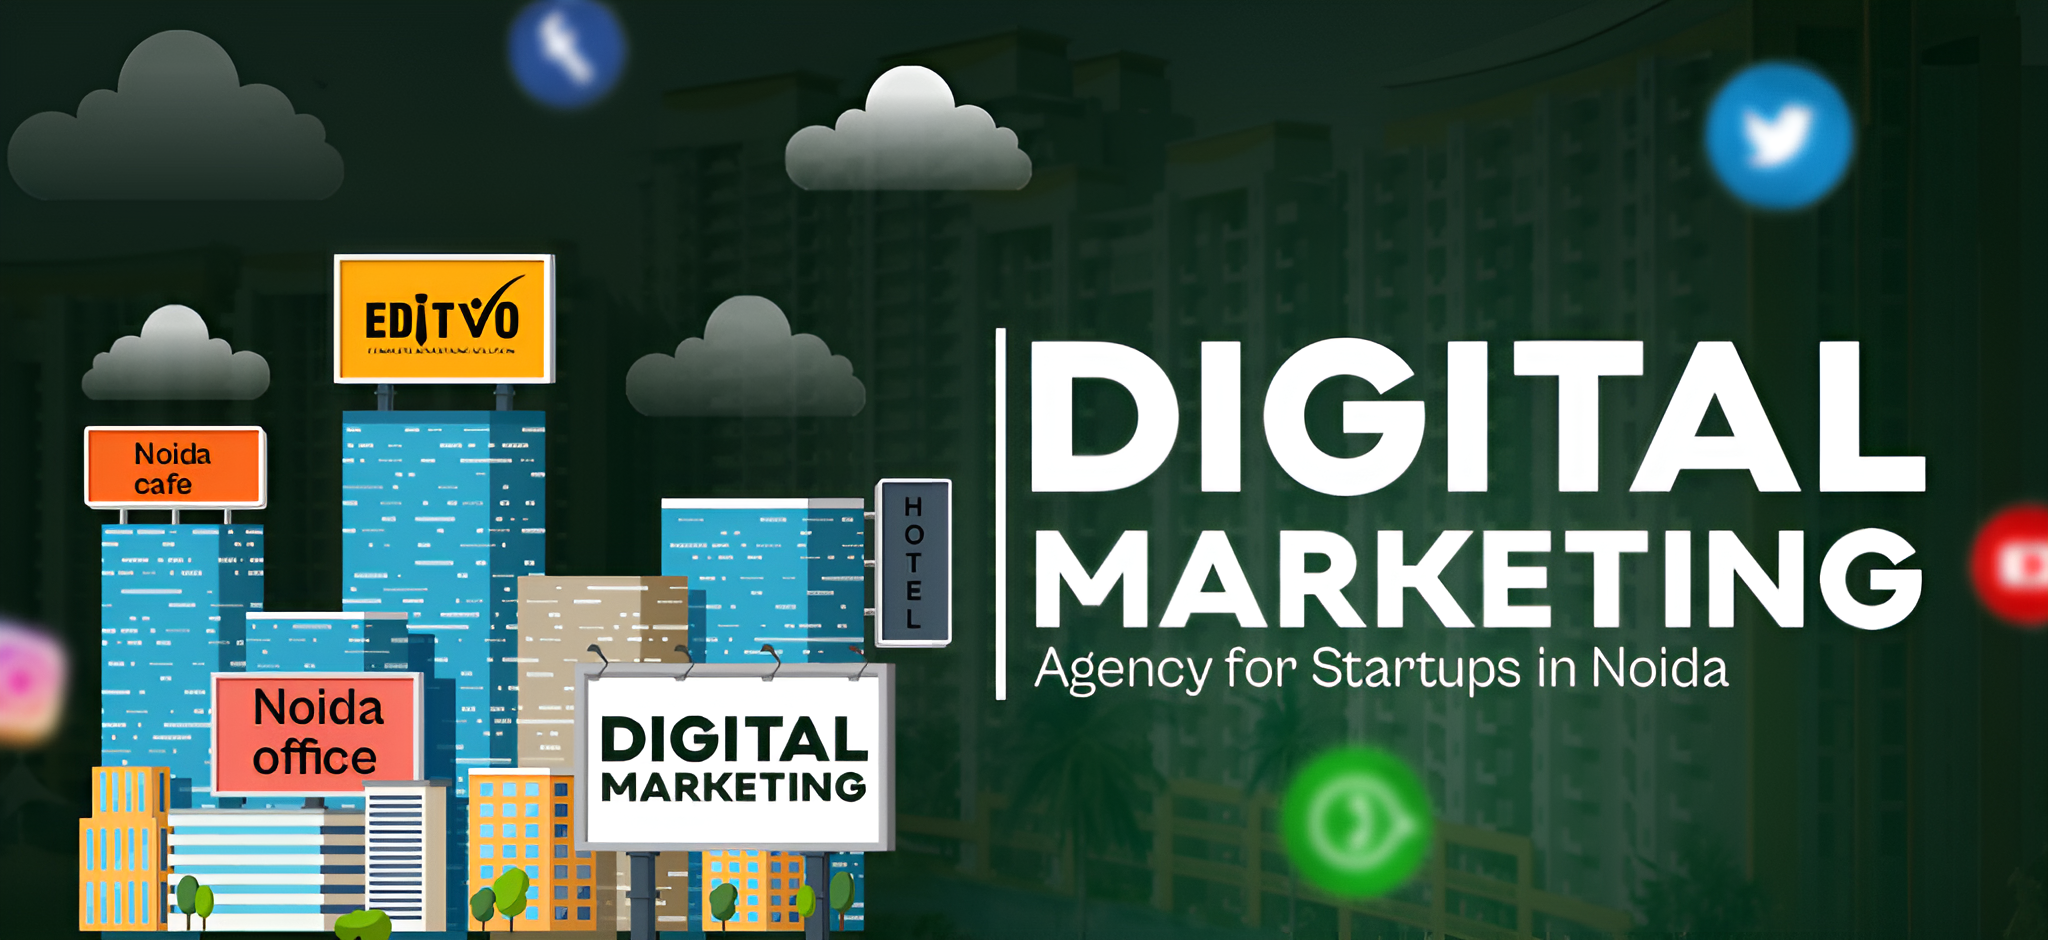 Digital Marketing Agency for Startups in Noida